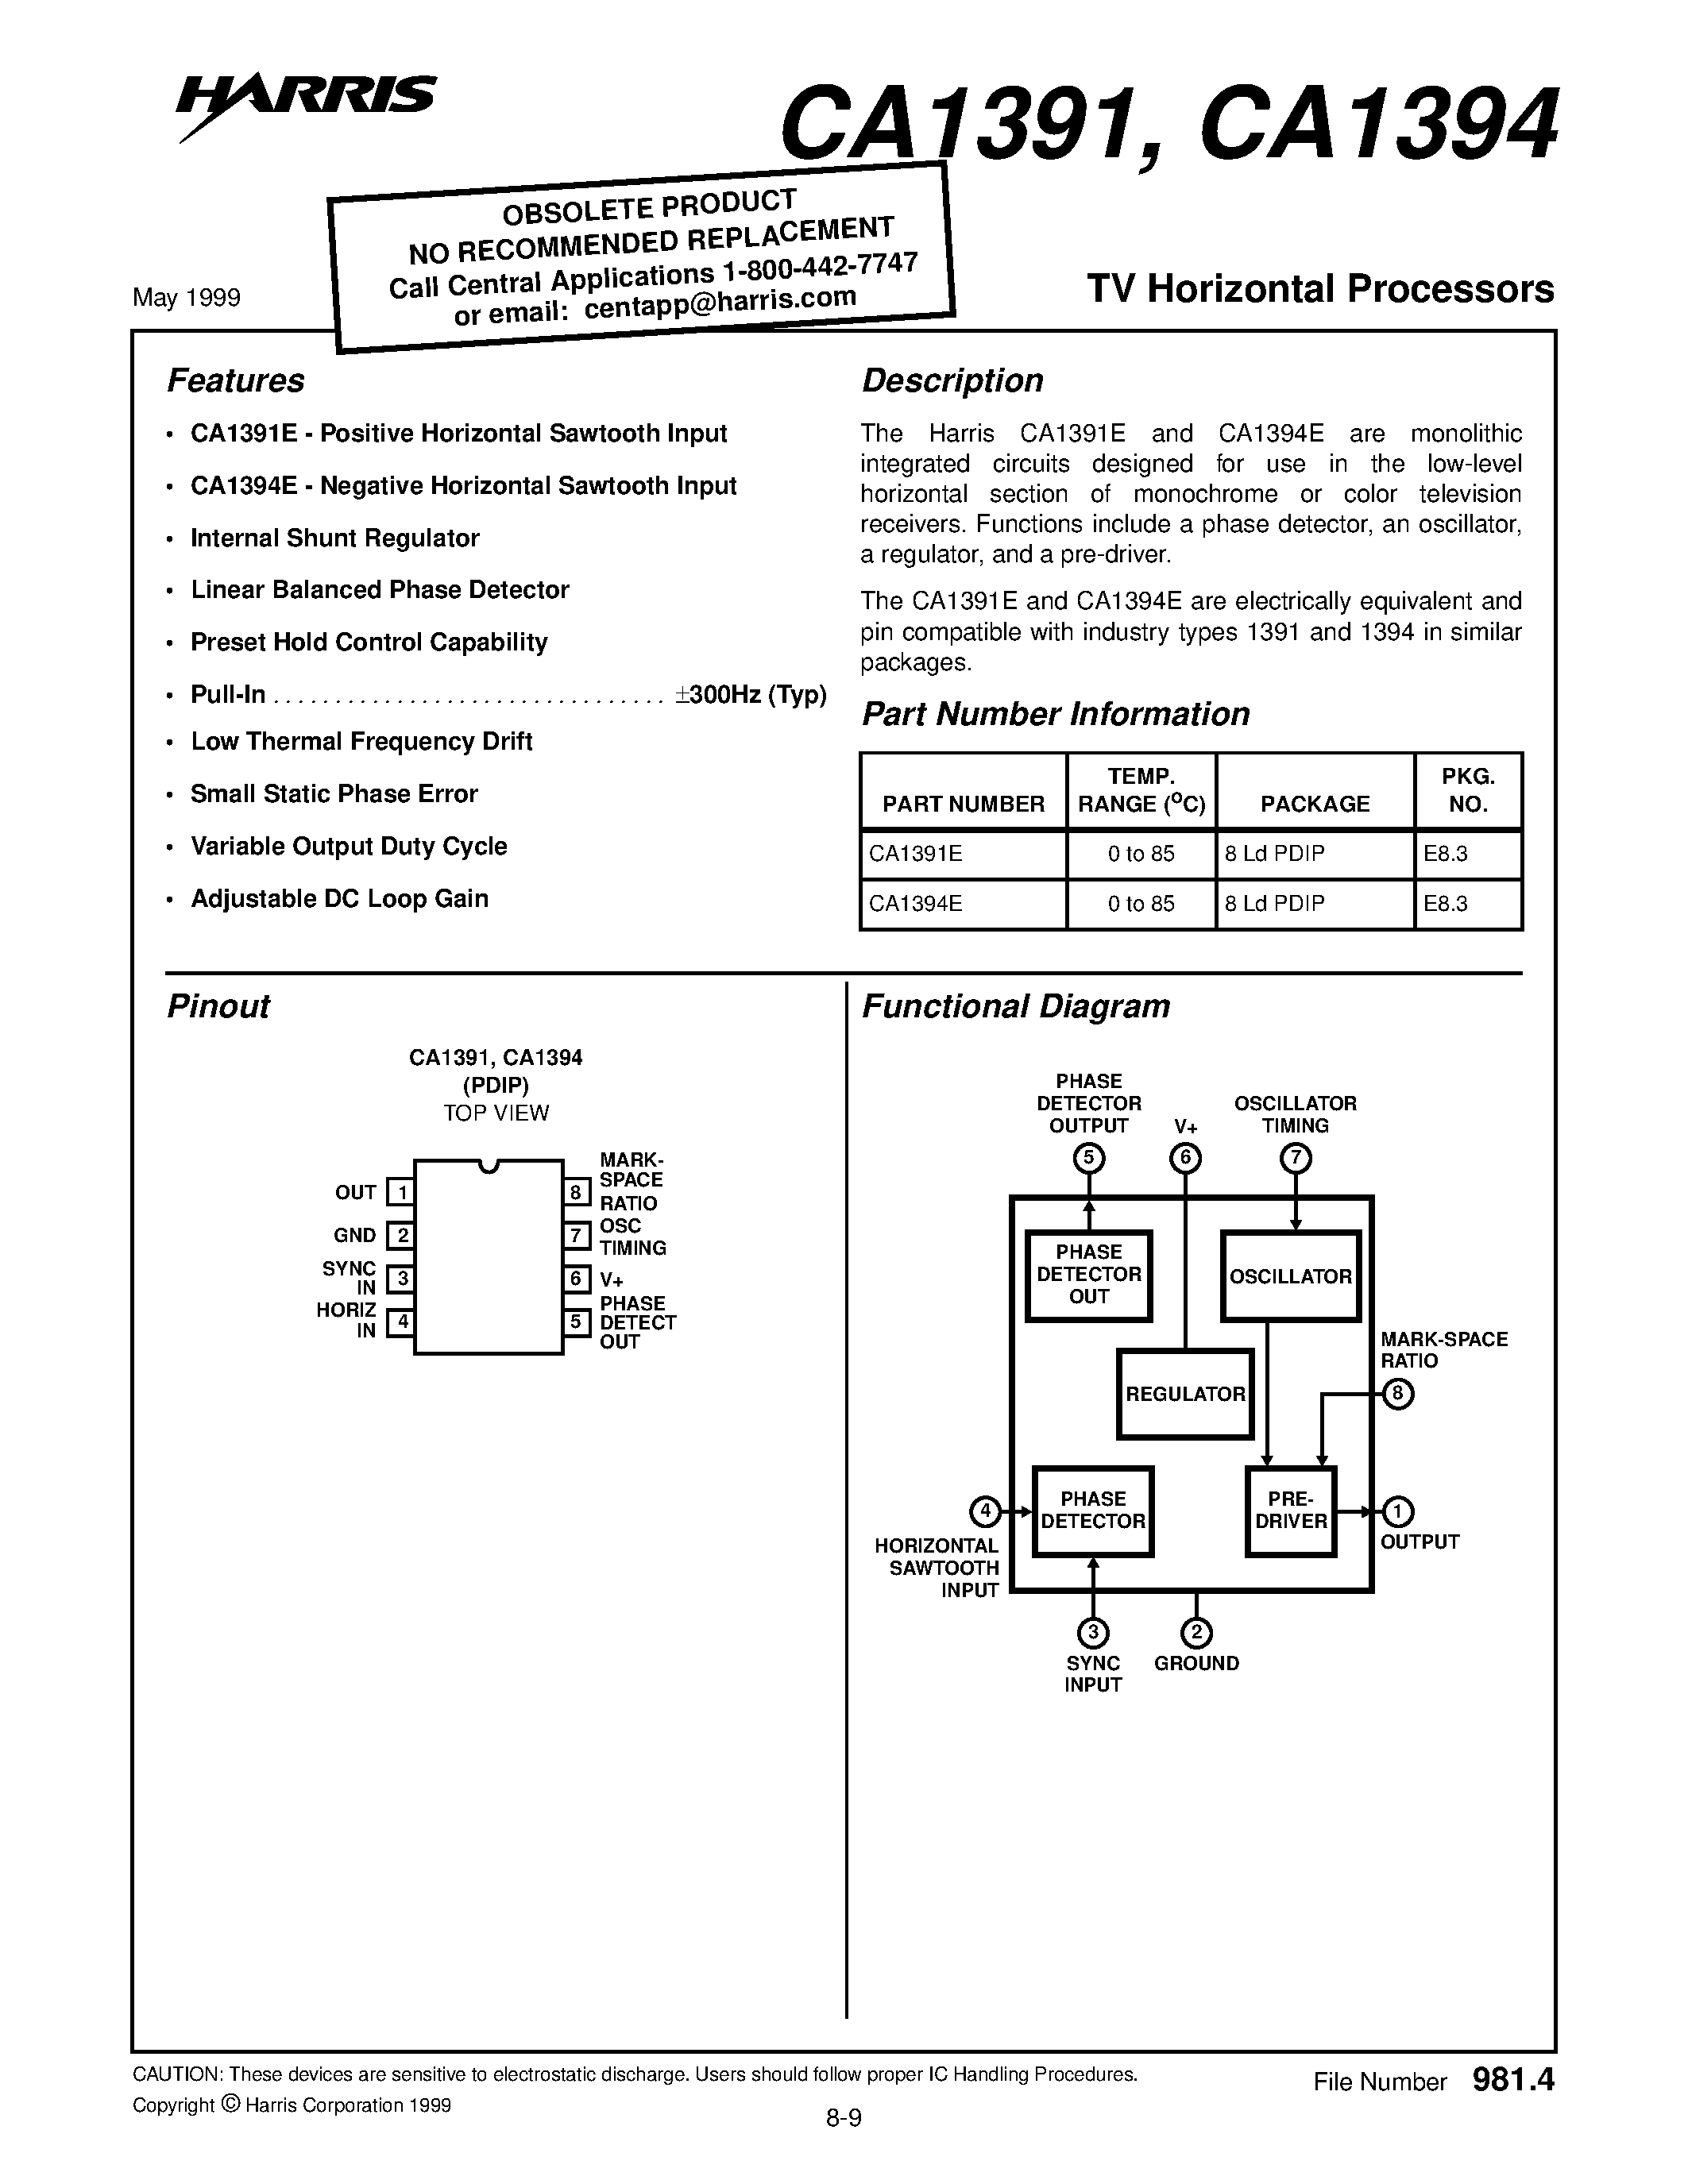 Datasheet CA1391 - (CA1391 / CA1394) TV Horizontal Processors page 1